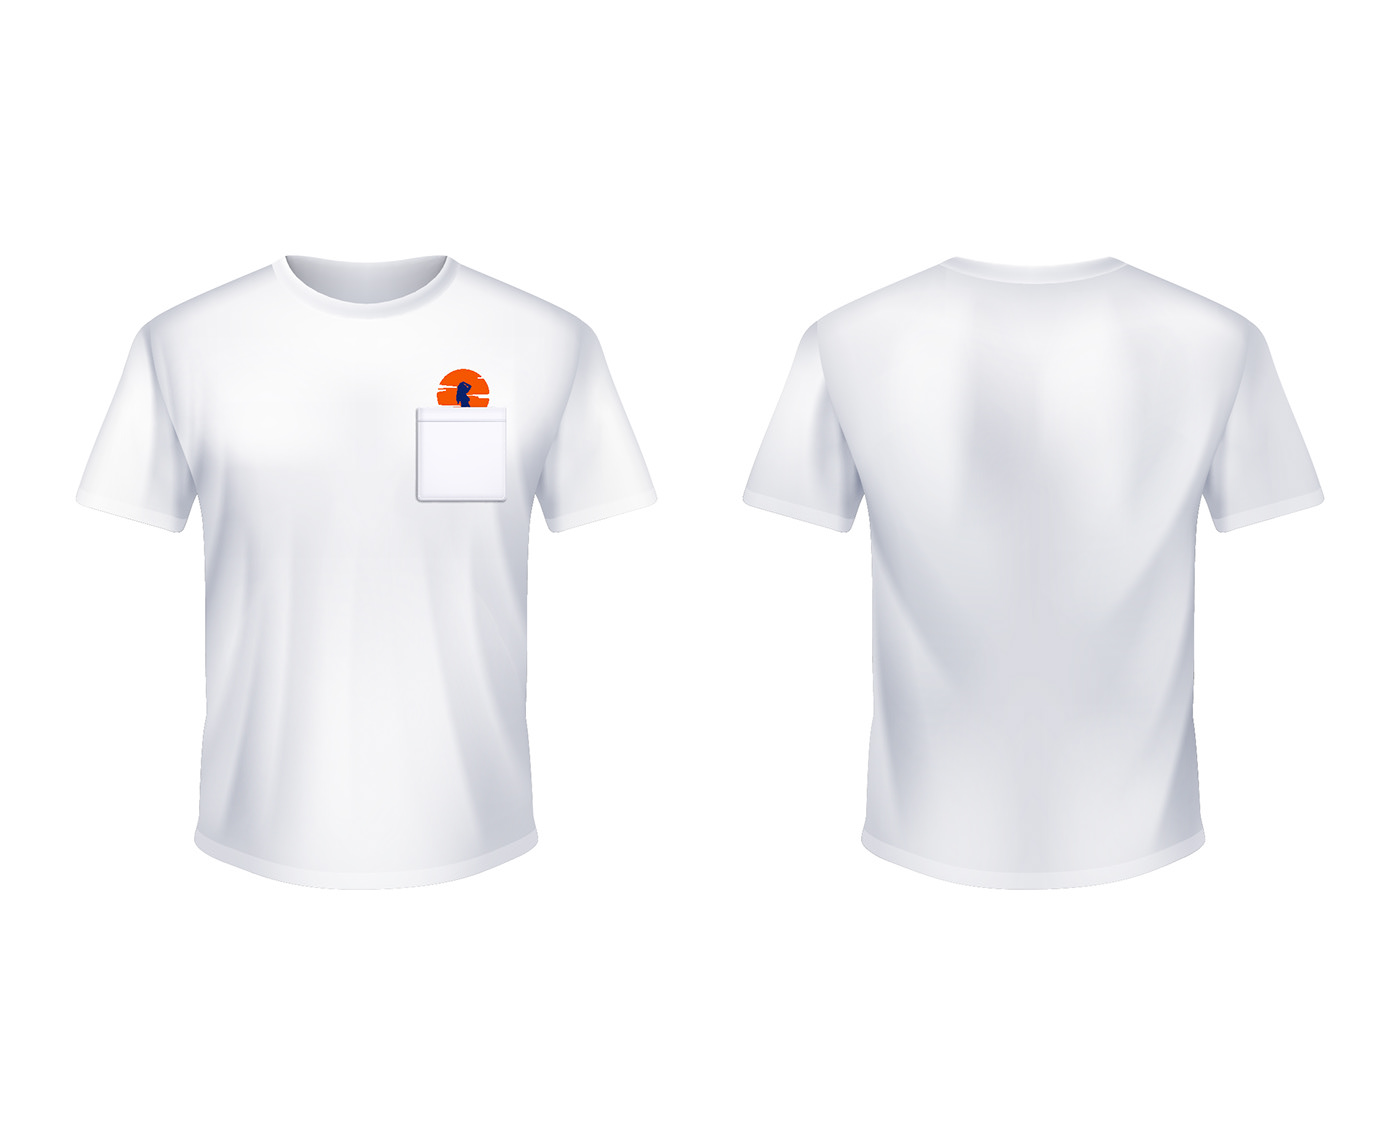 ACTIVE SHIRT Tshirt Design t-shirt adobe illustrator Brand Design Graphic Designer branding 